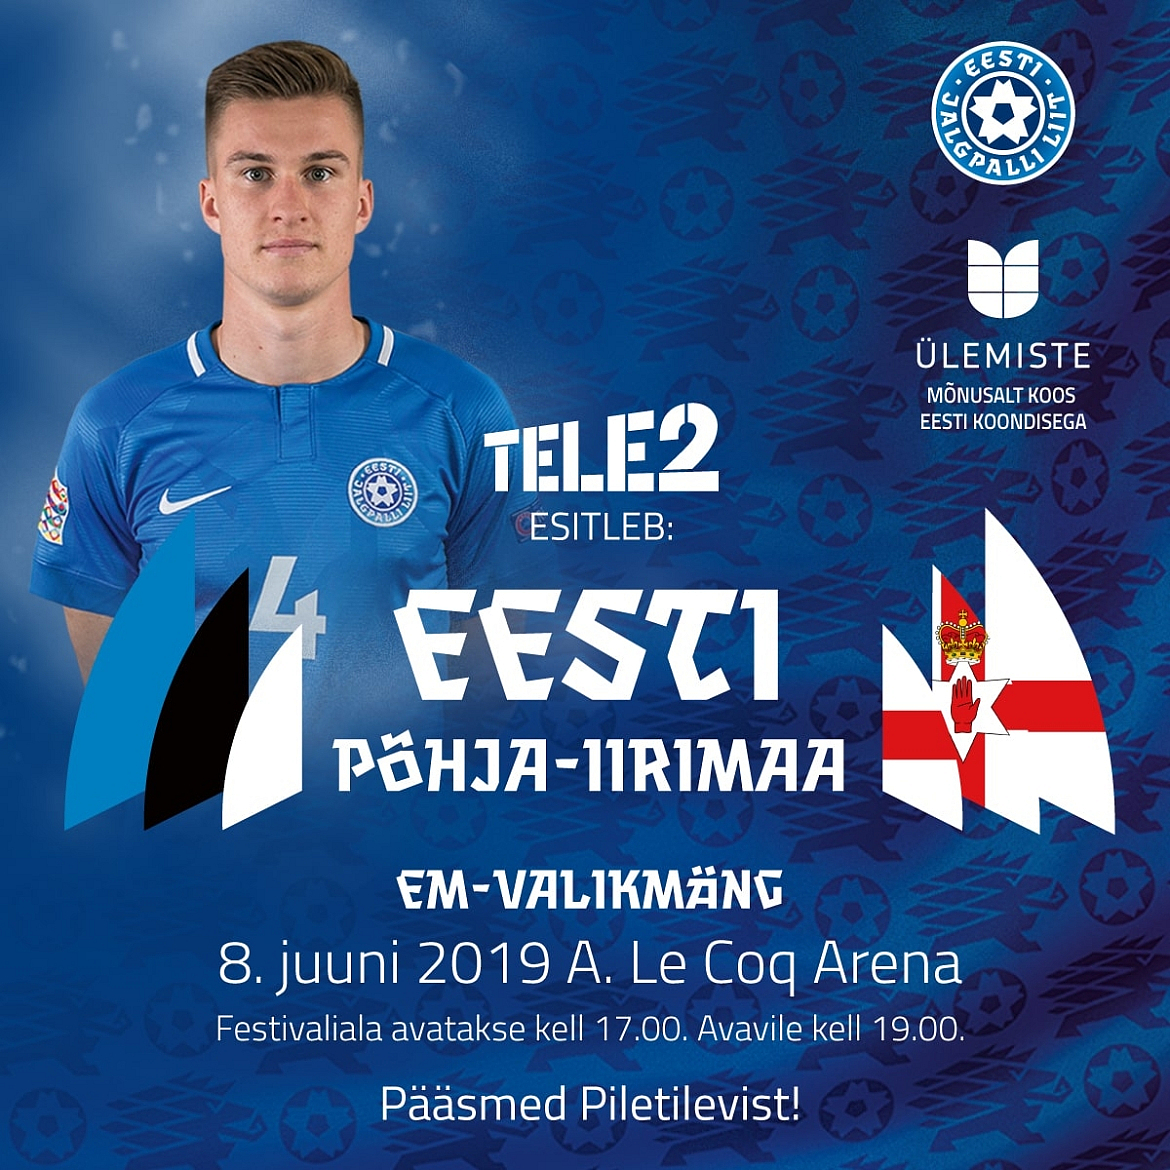 Eesti jalgpallikoondise banner